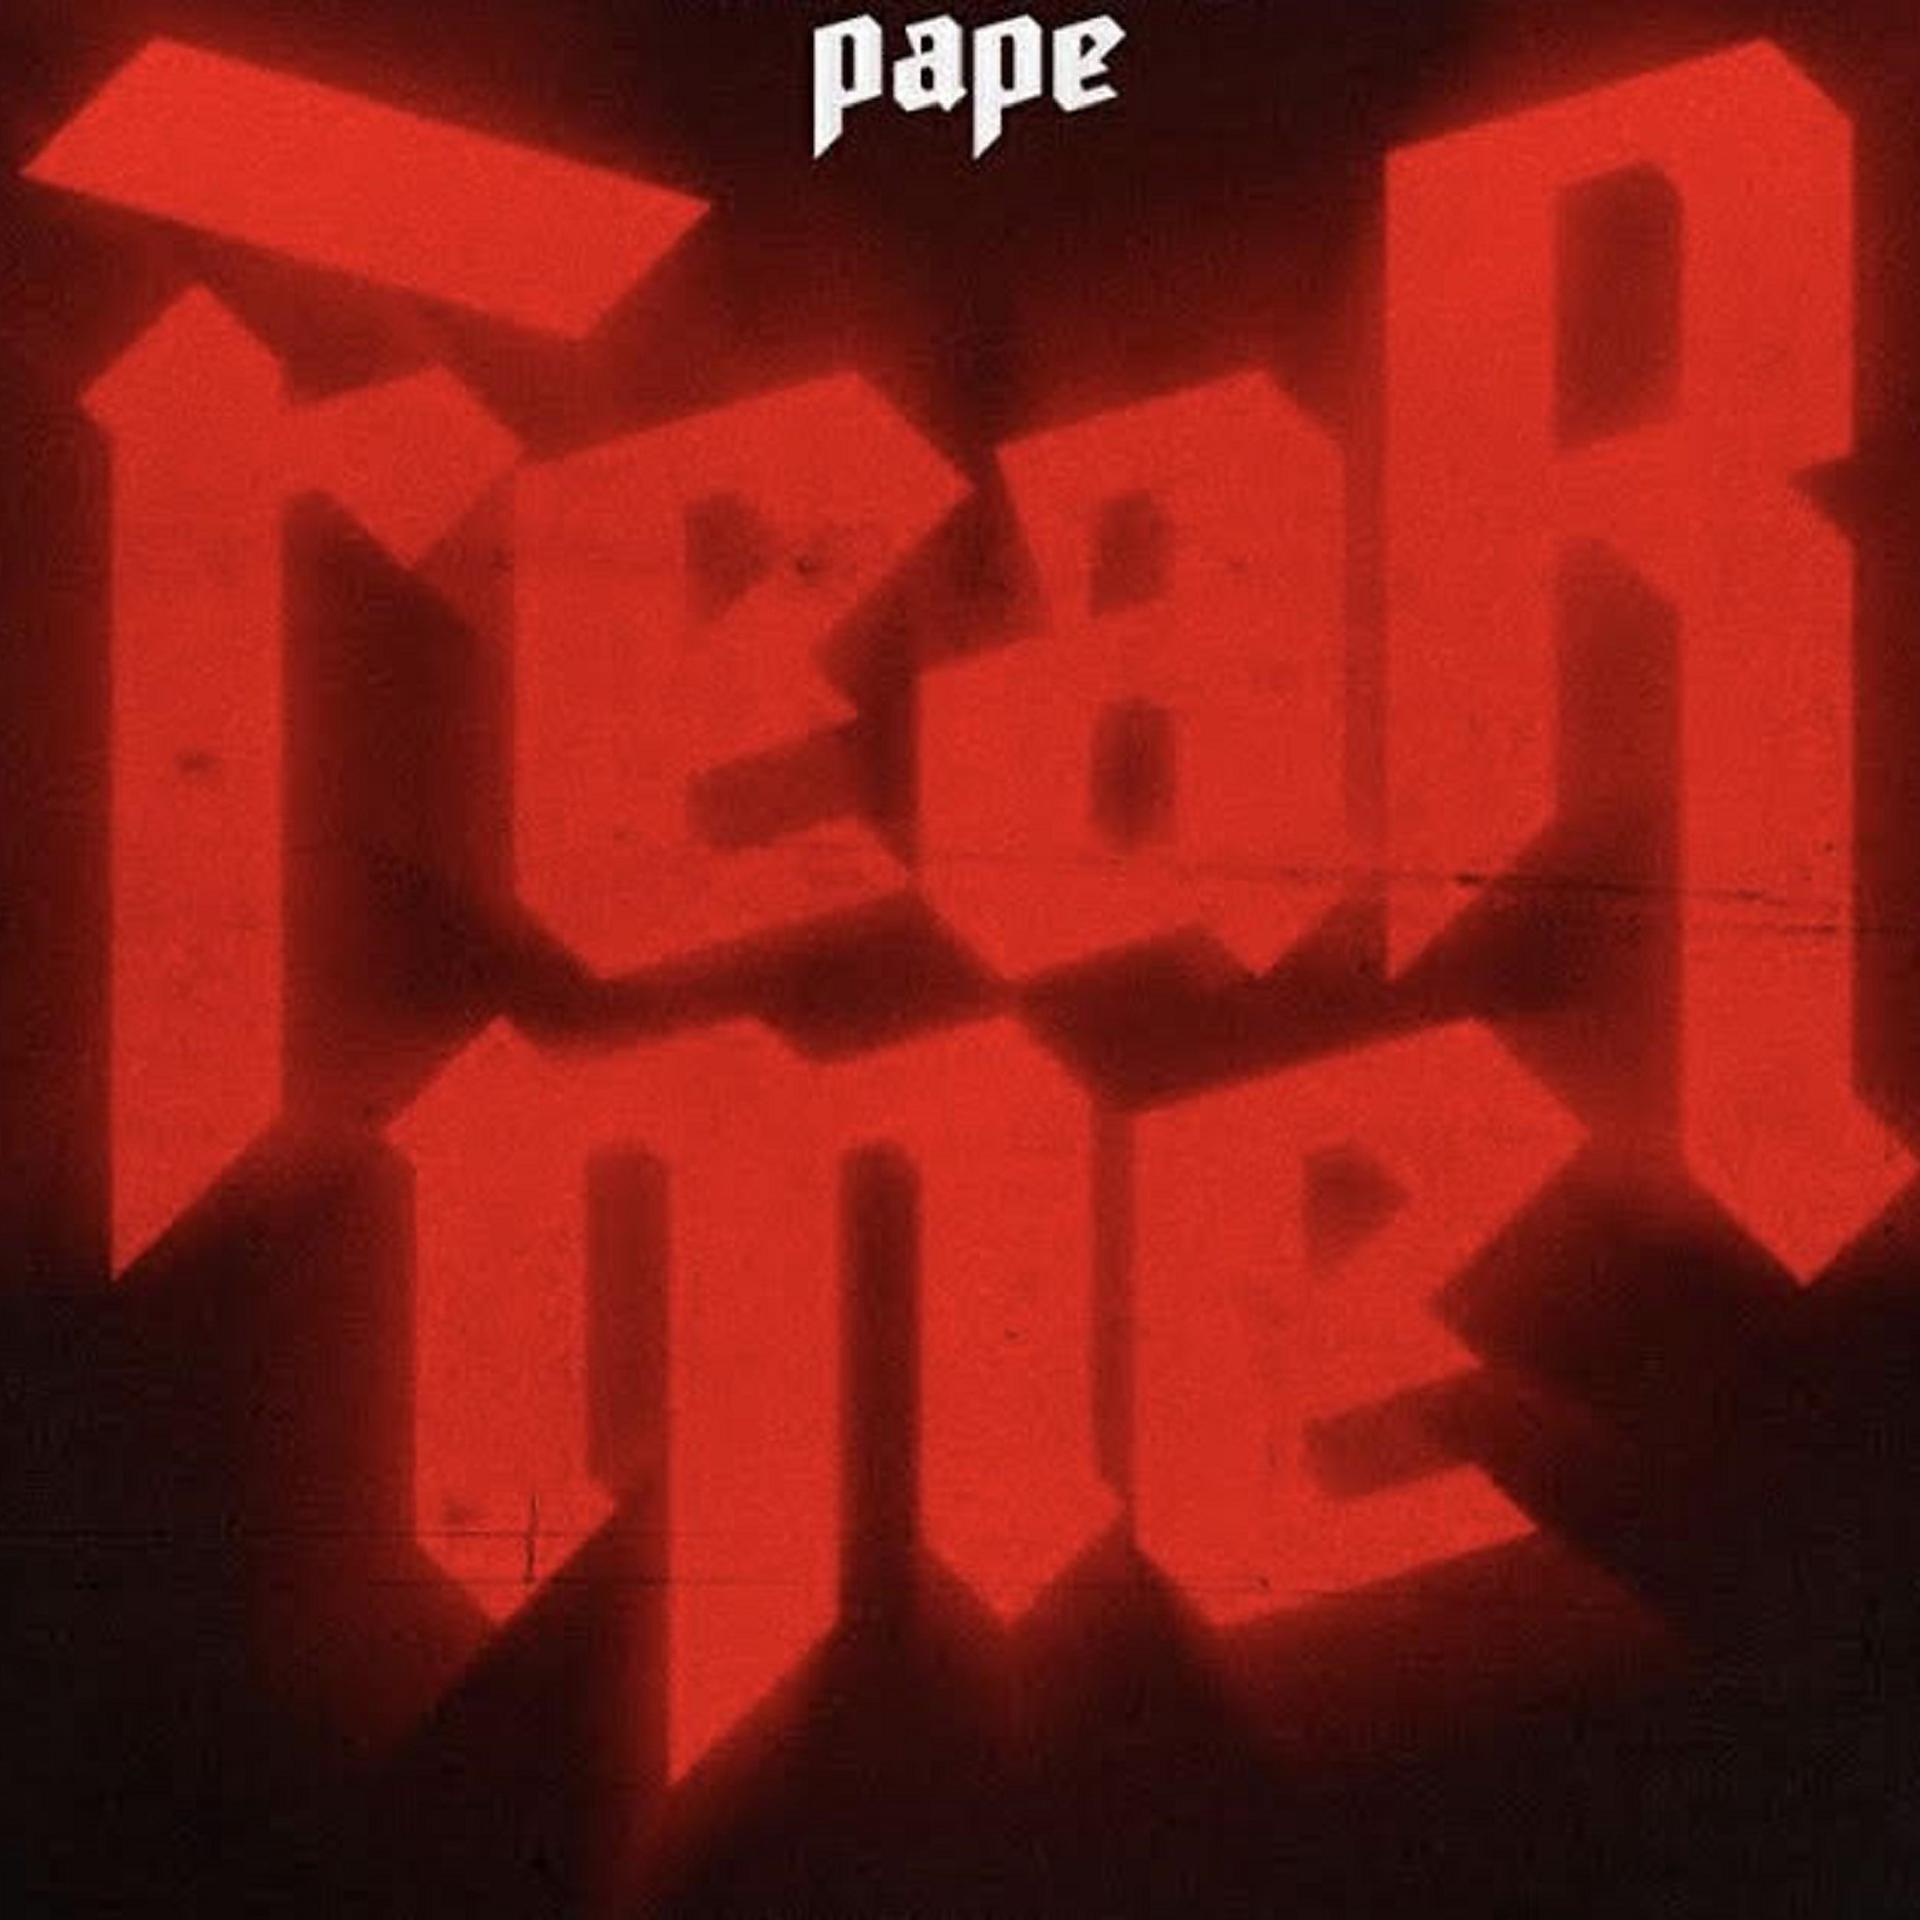 Постер альбома Fear Me